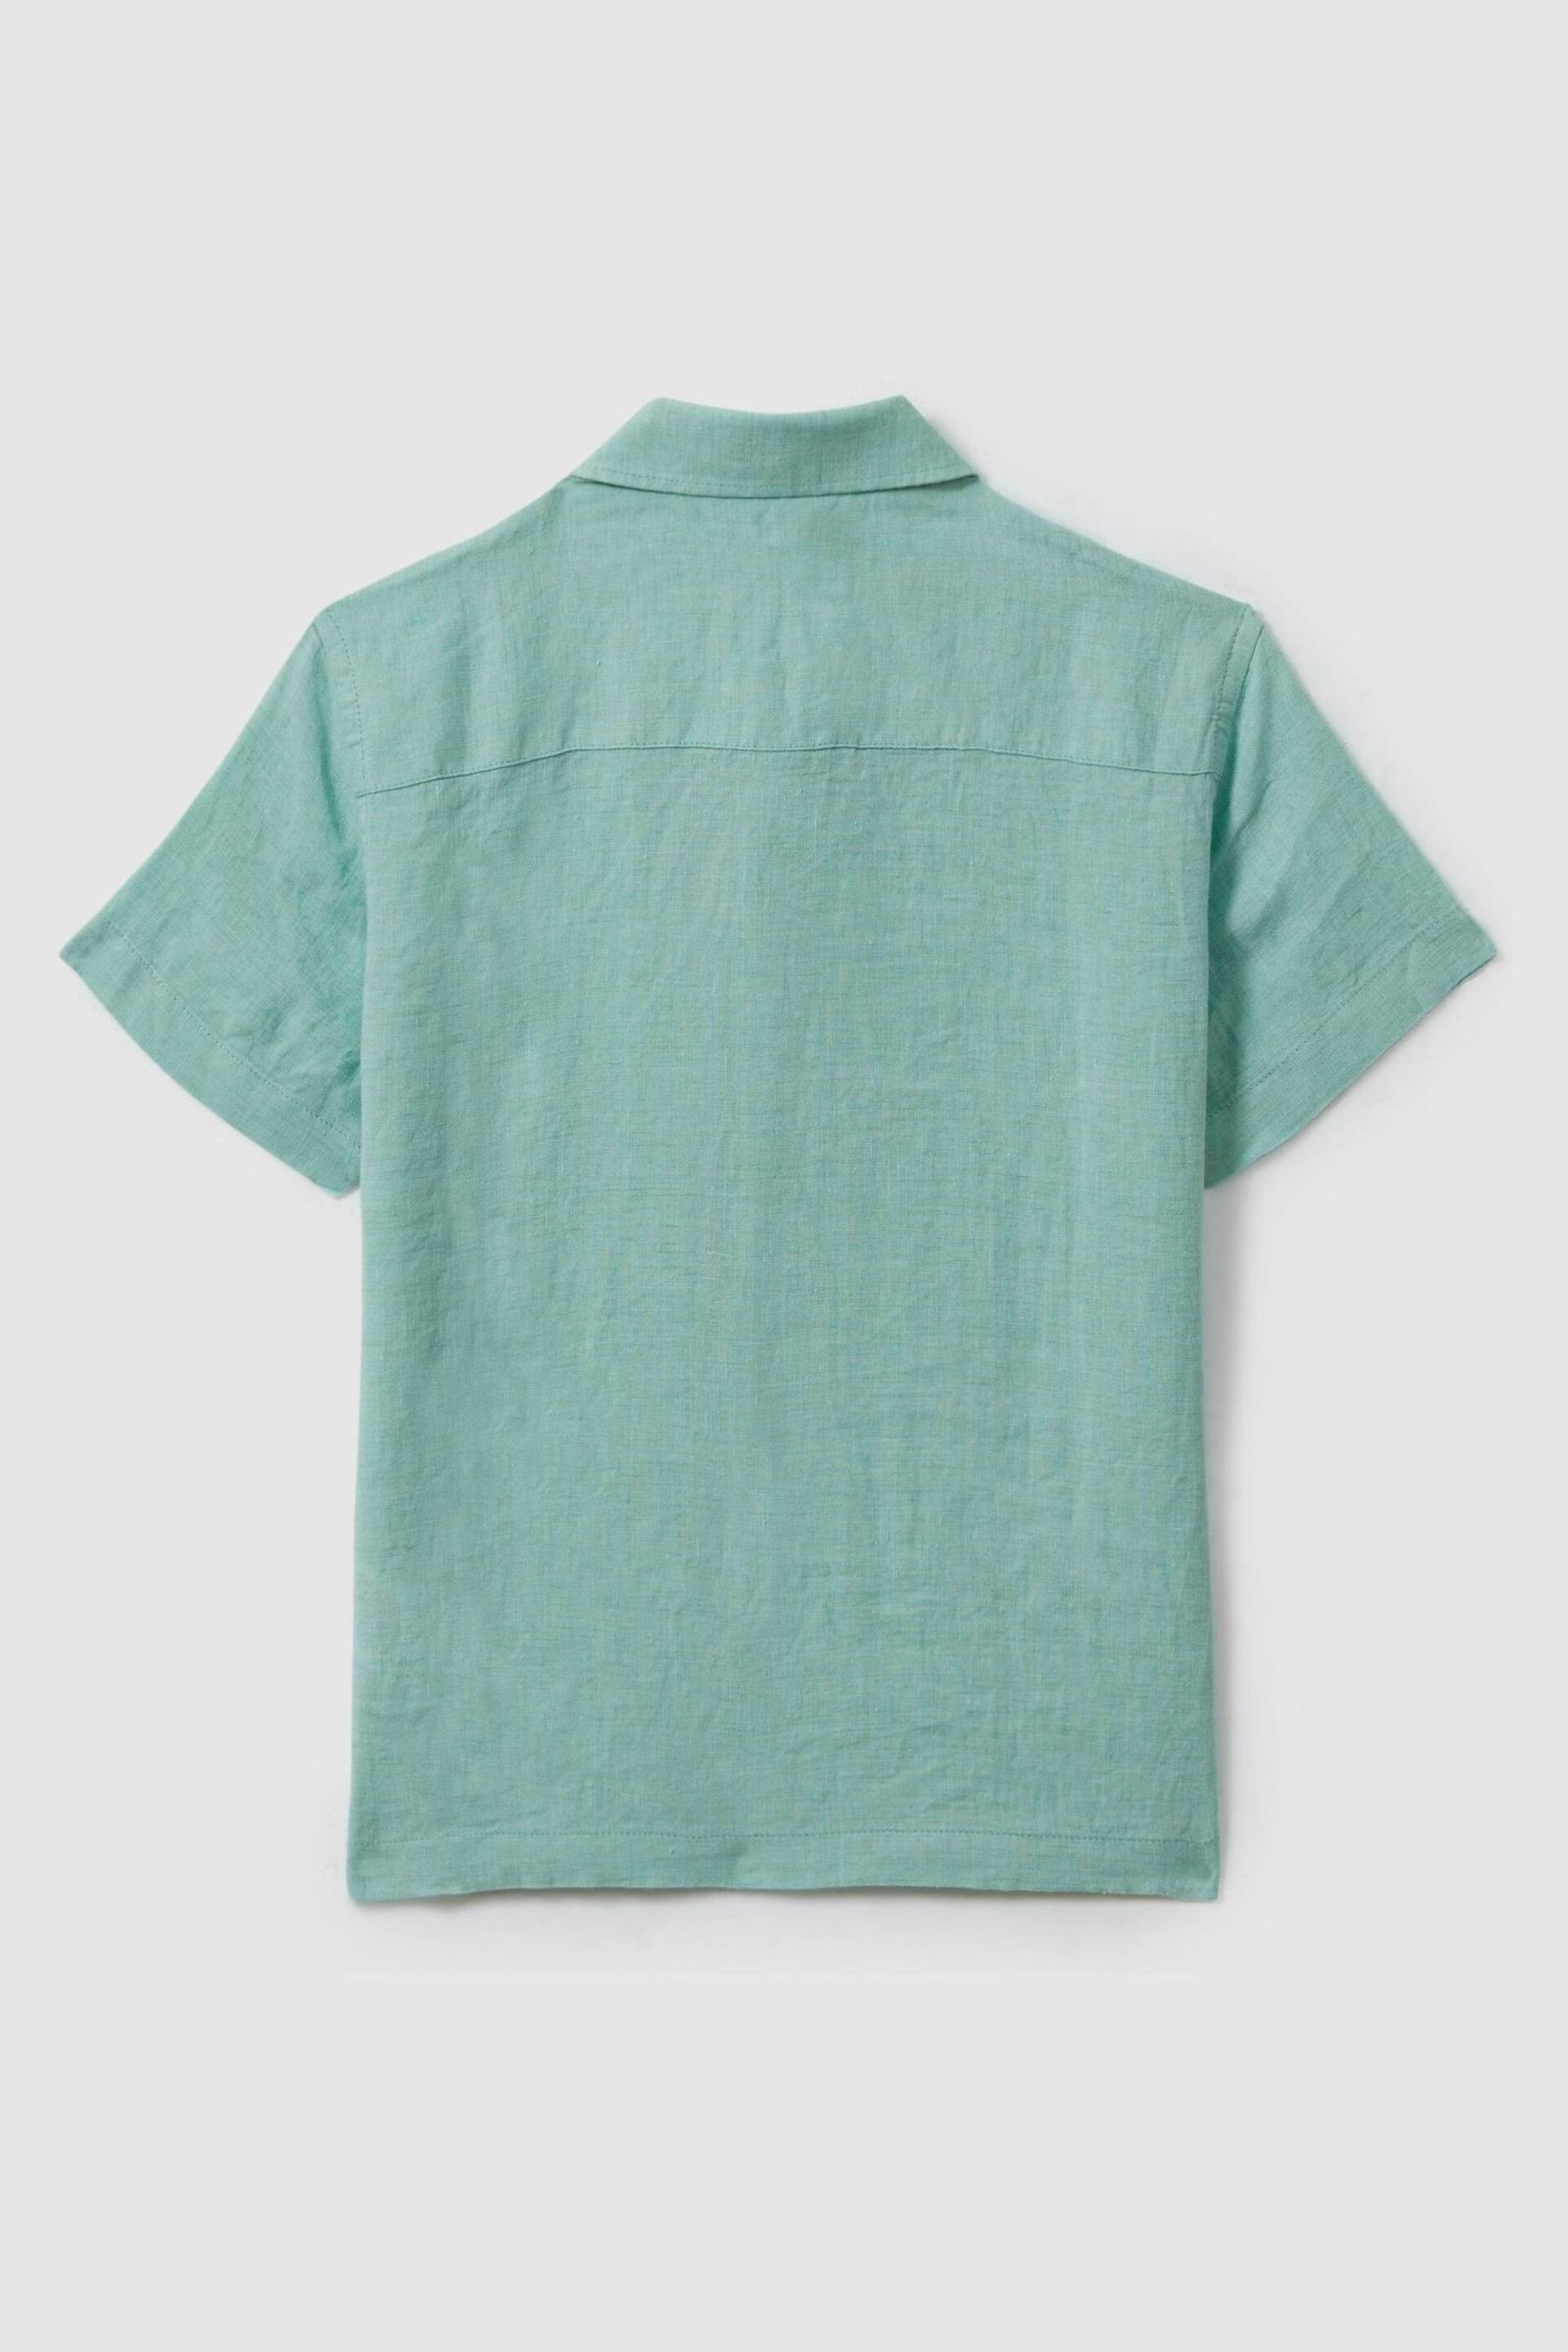 Reiss Bermuda Green Holiday Junior Short Sleeve Linen Shirt - Image 2 of 3